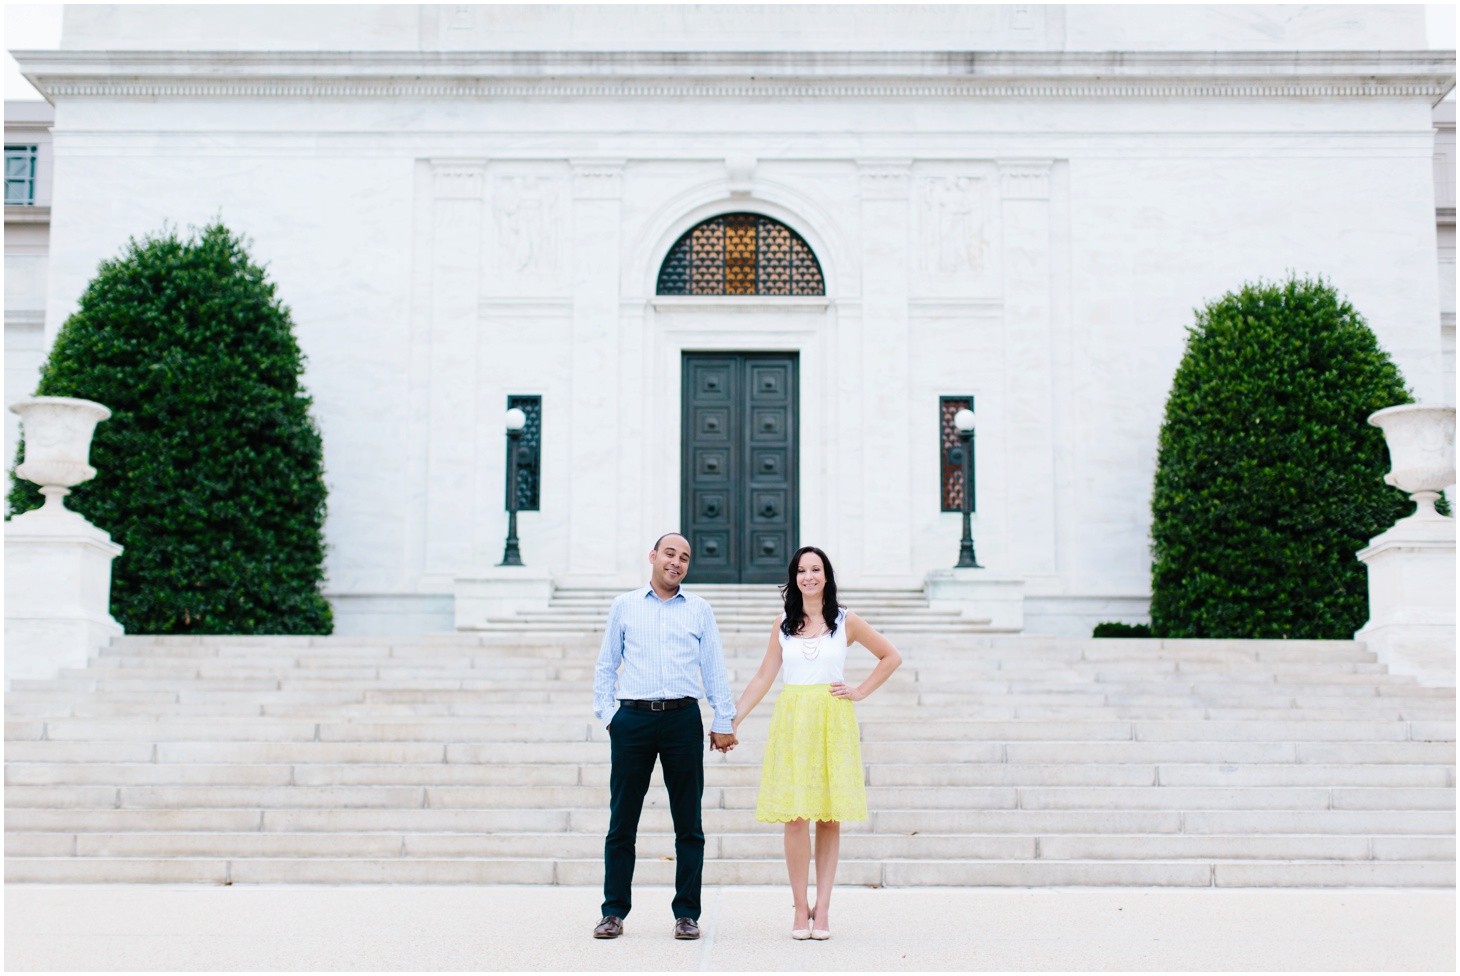 Summertime Engagement Portraits near Washington DC Monuments